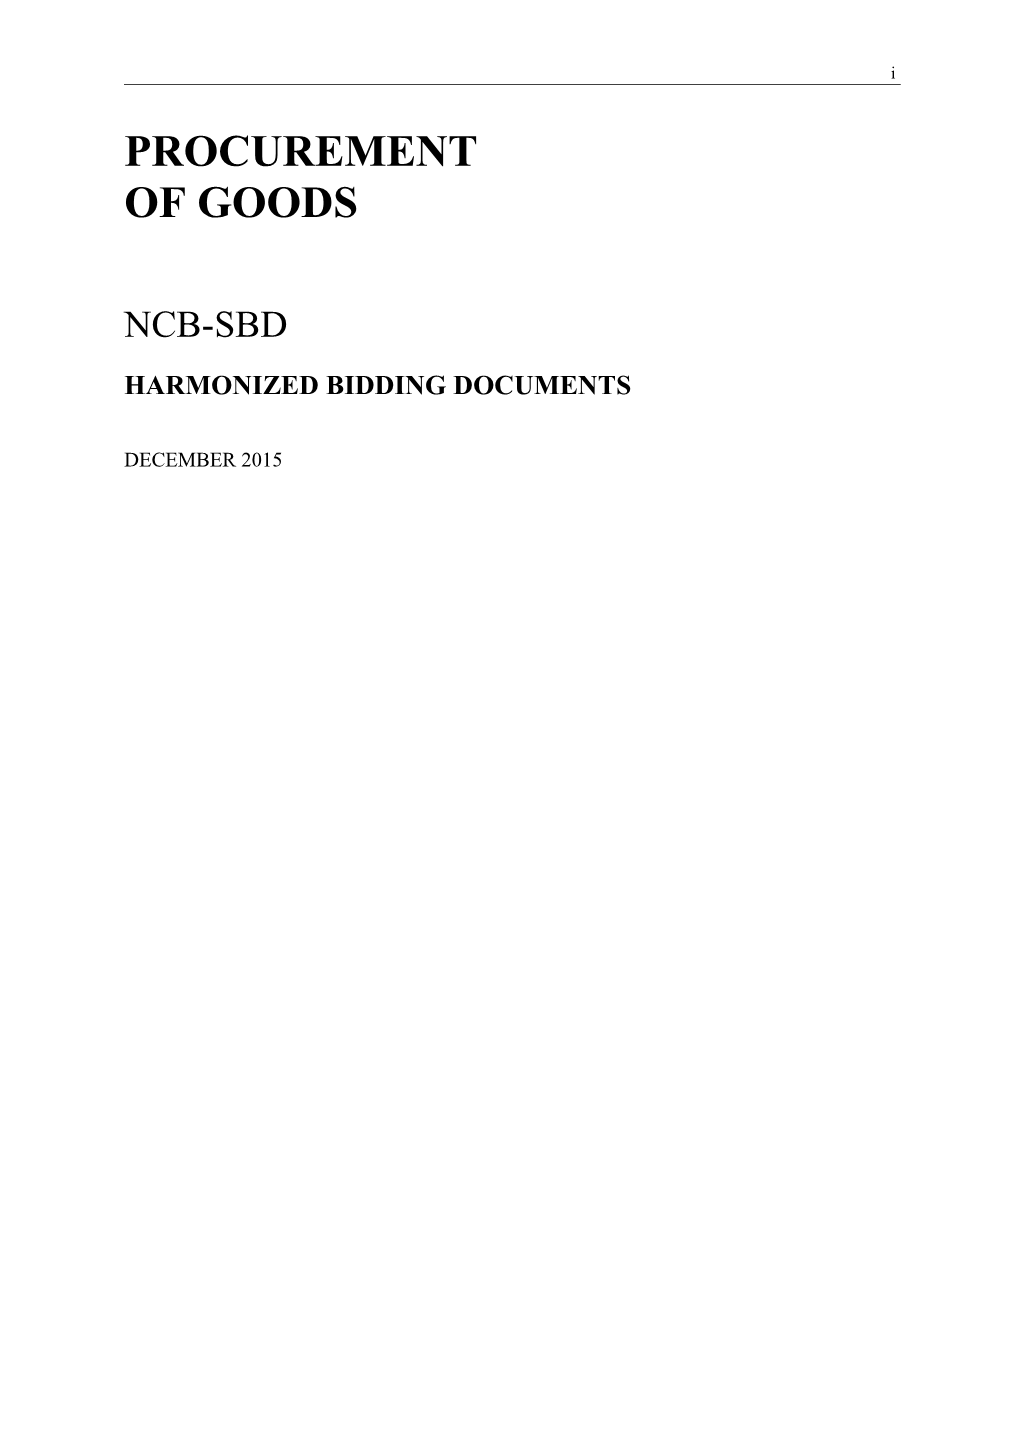 Standard Bidding Documents s14